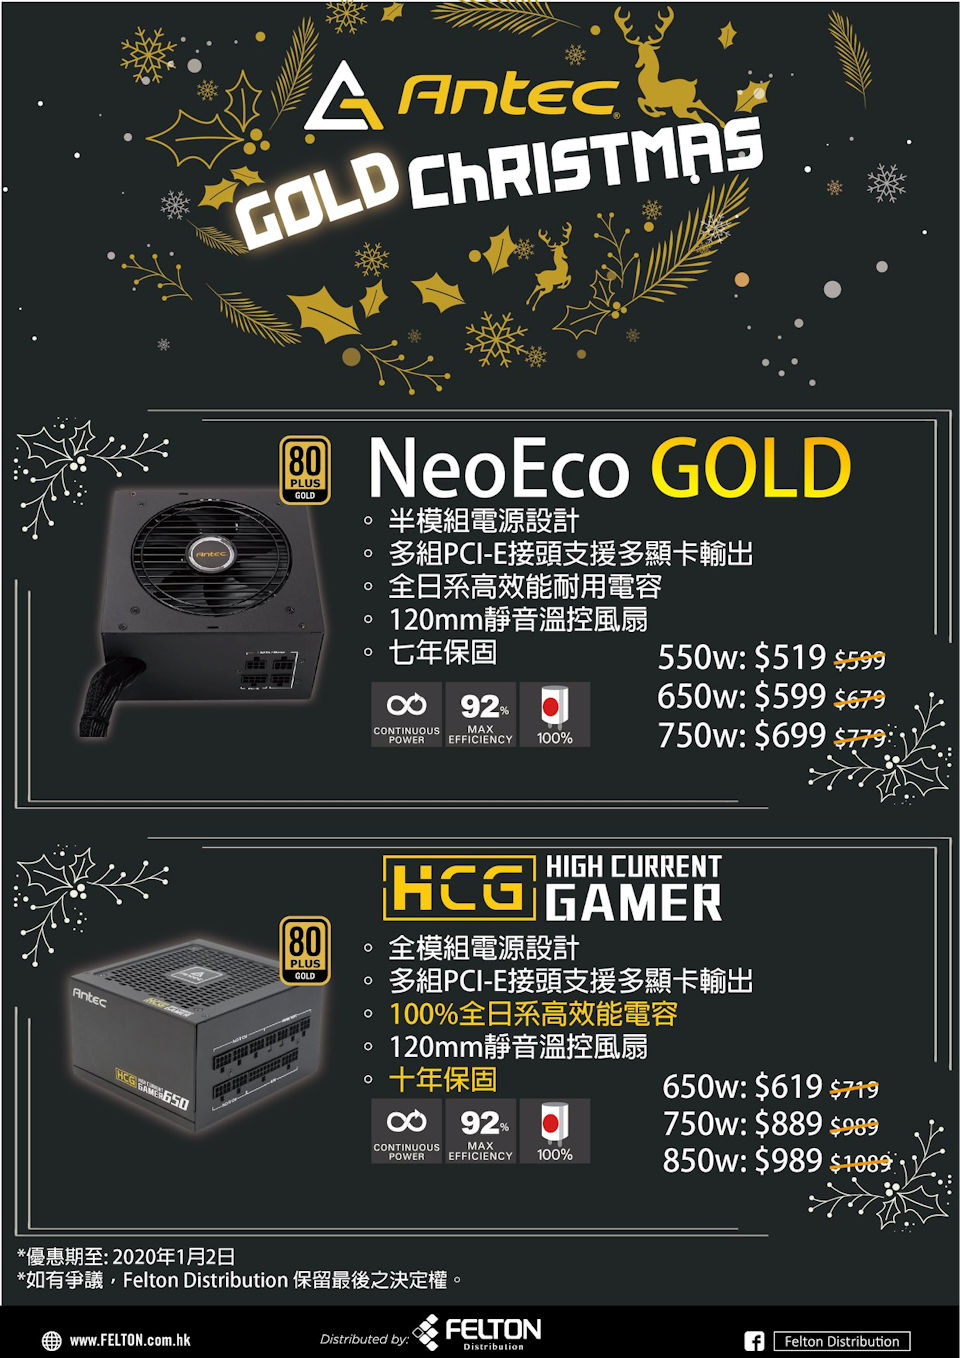 🎄ANTEC 黃金聖誕跨年優惠🎄】 NecEco GOLD、HCG GOLD 金牌牛牛齊齊減 